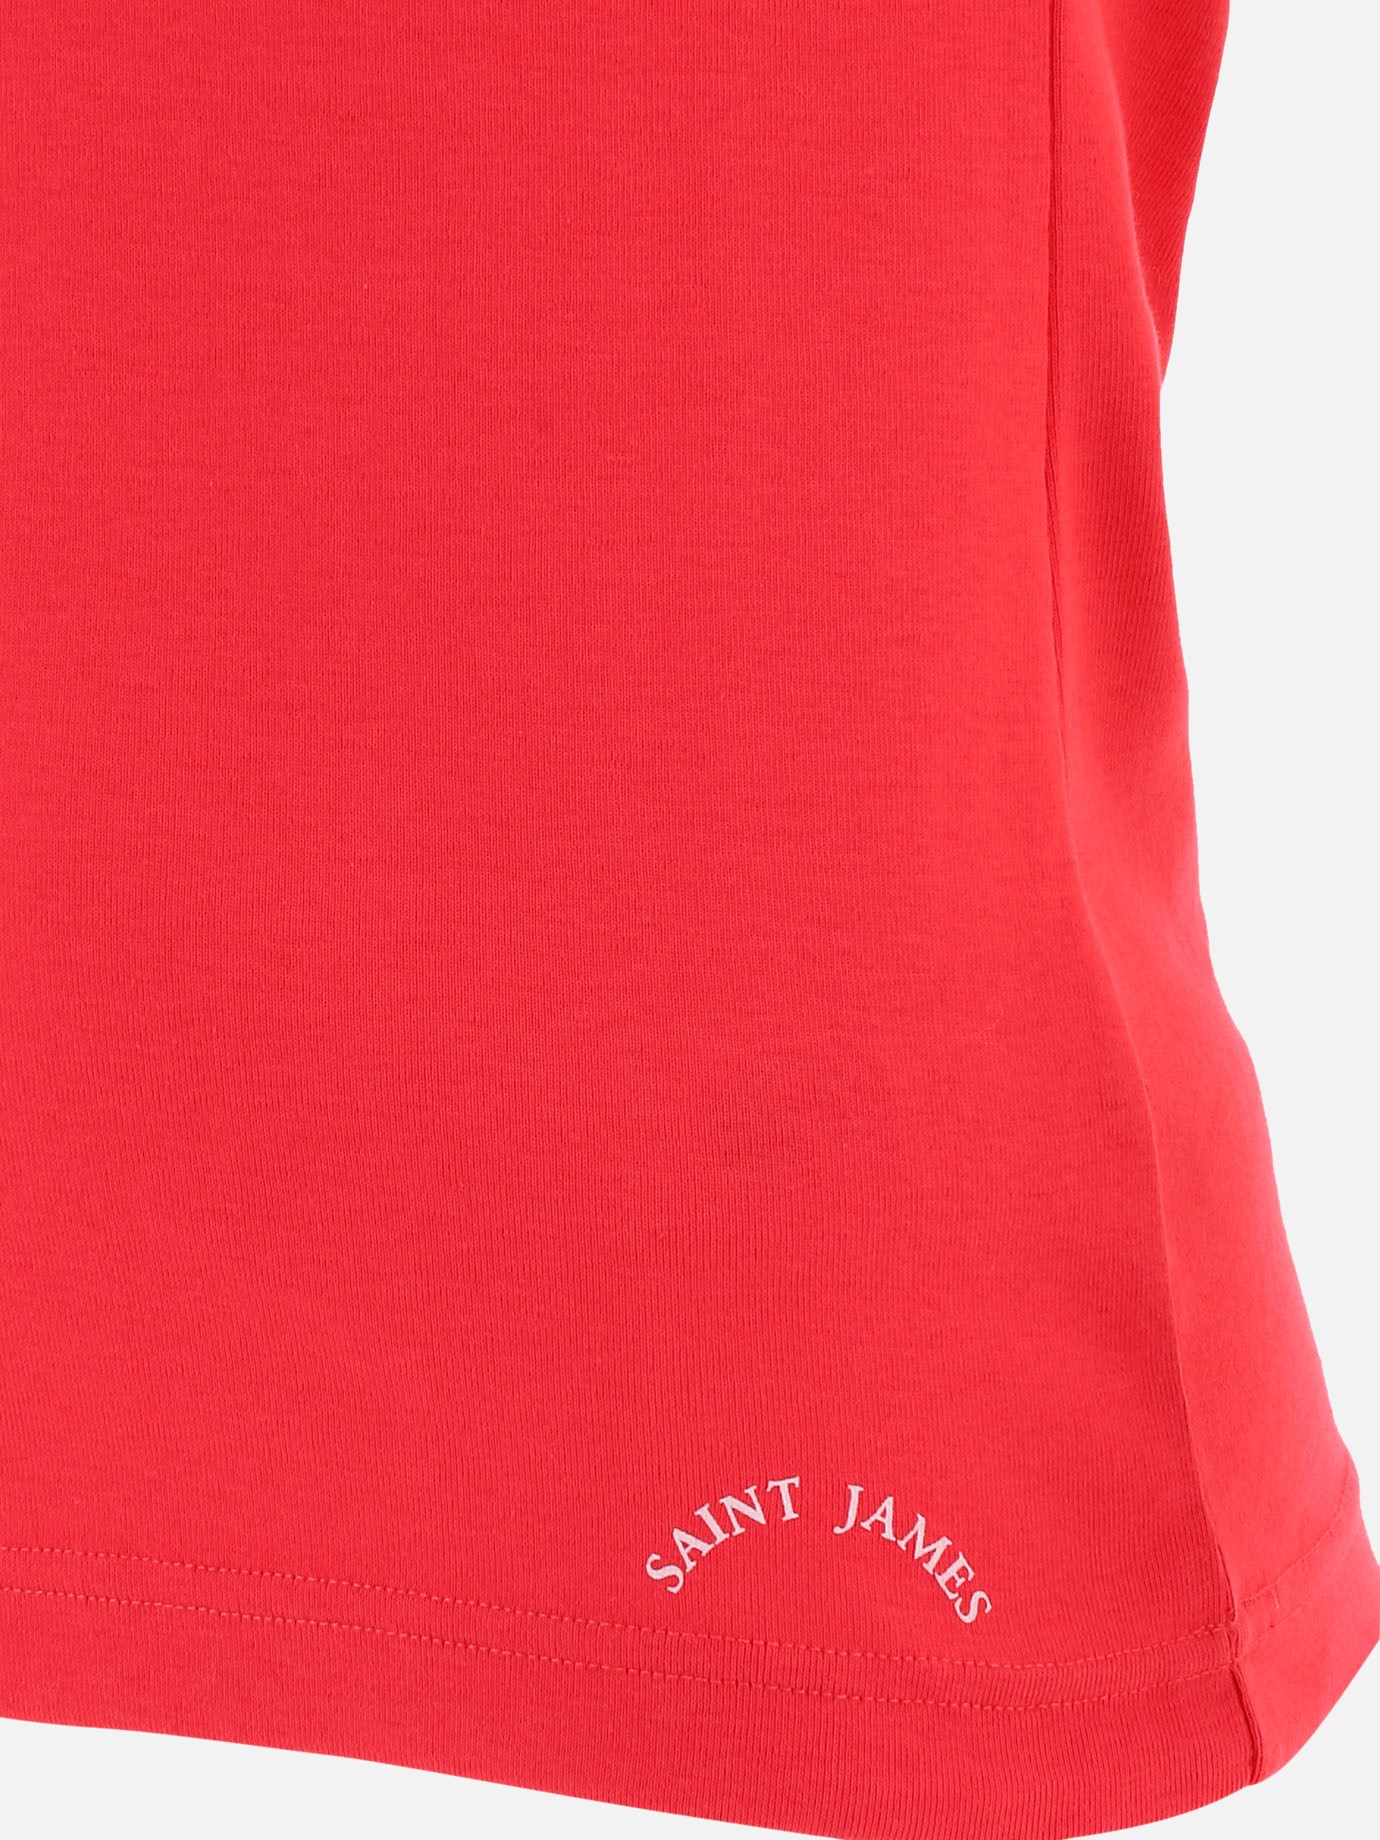 T-shirt  Ajaccio II  by Saint James